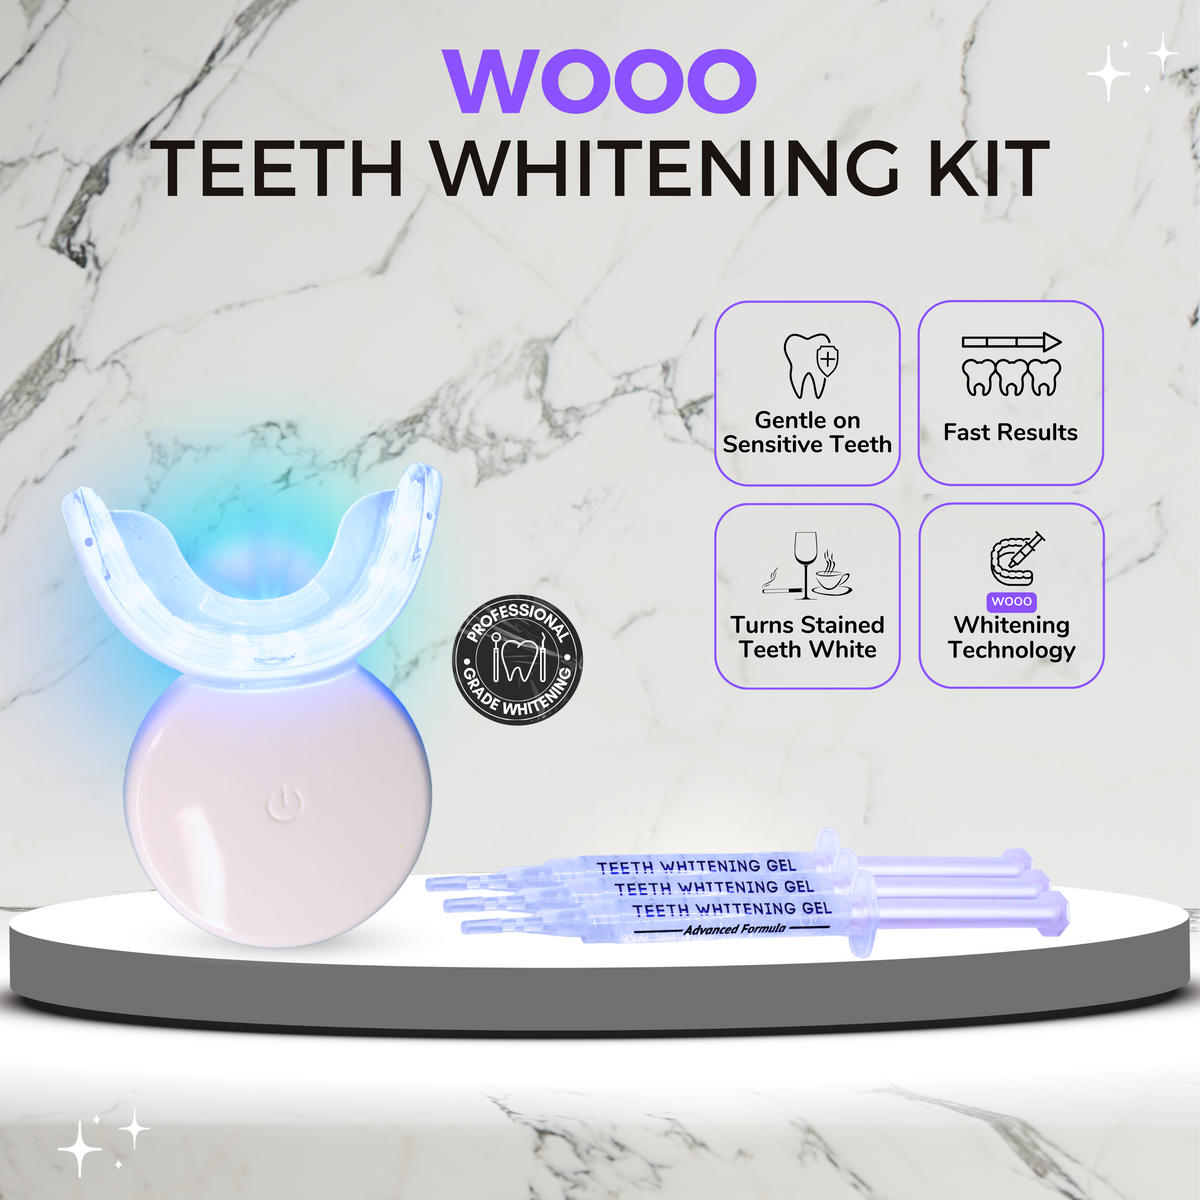 Wooo Teeth Whitening Kit